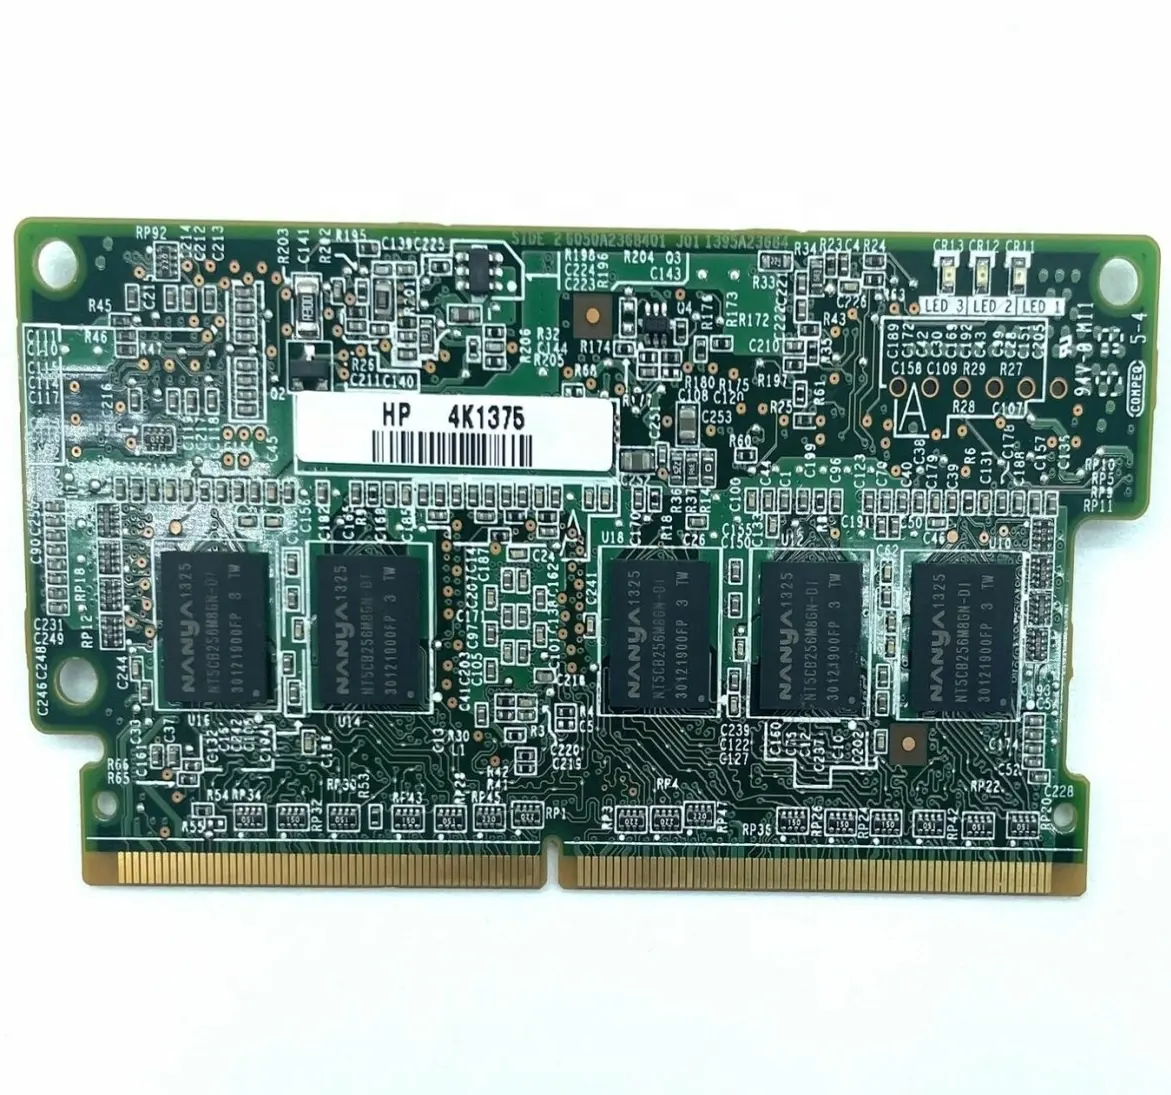 Memoria caché del controlador RAID FBWC Flash de matriz inteligente 631681-B21 de 2GB